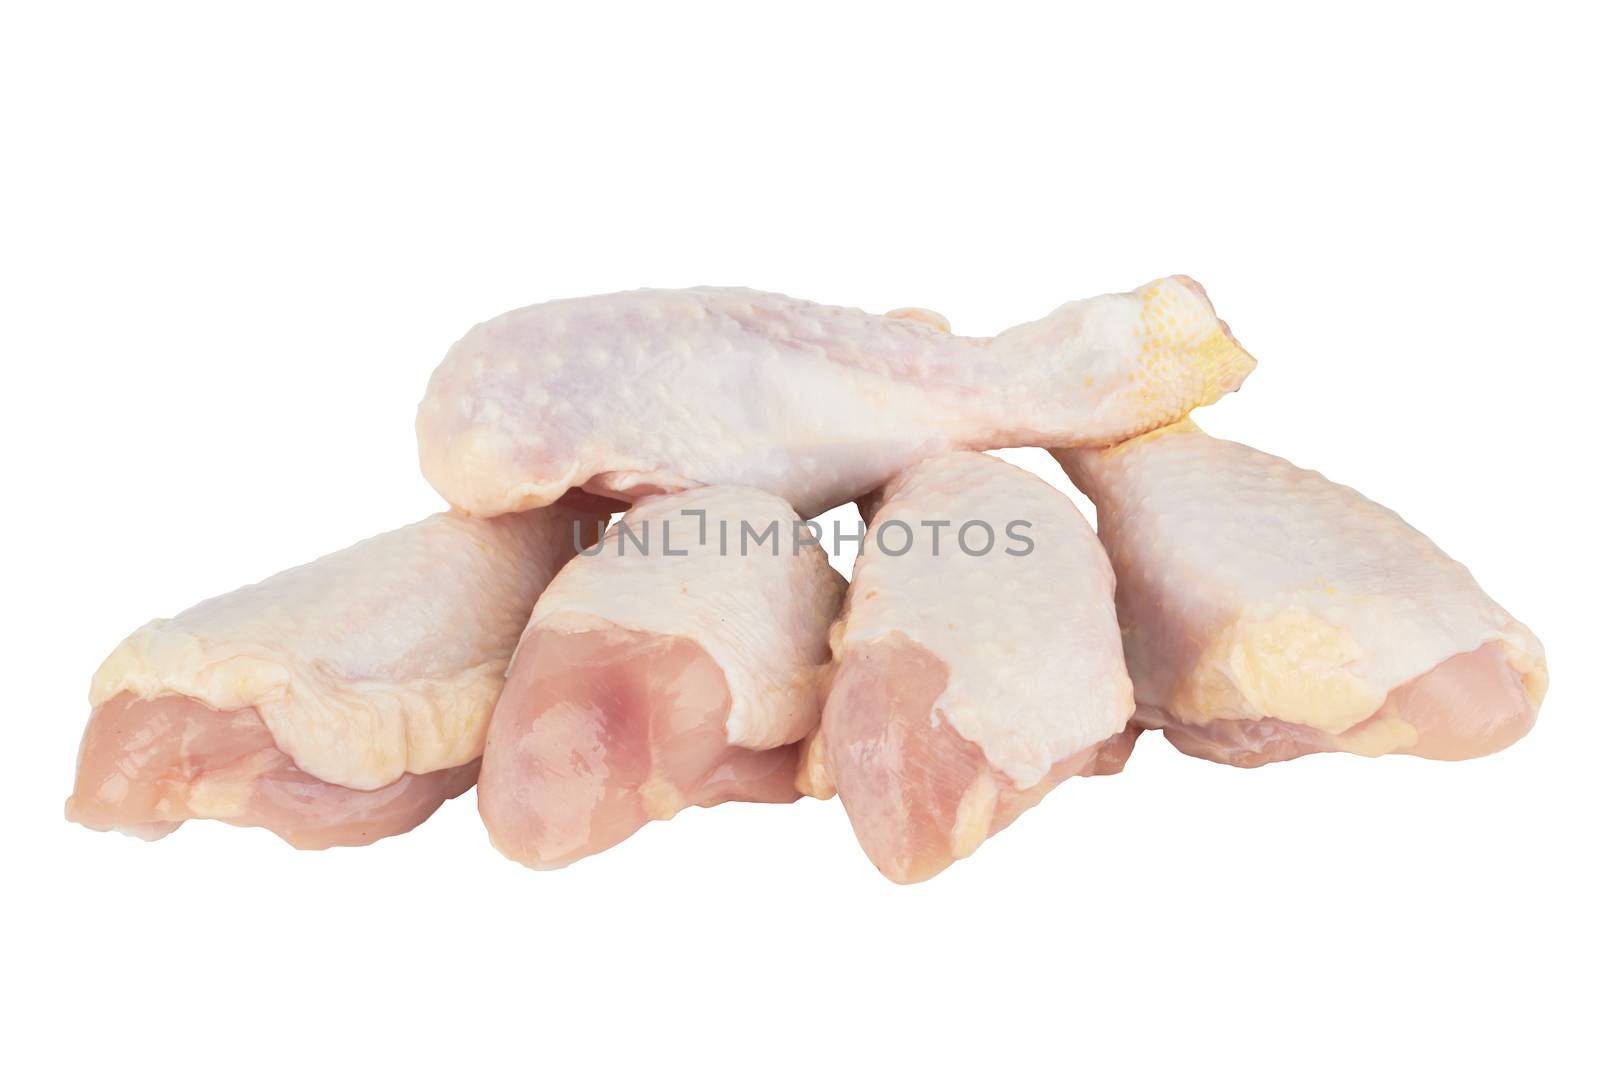 Chicken legs by pioneer111